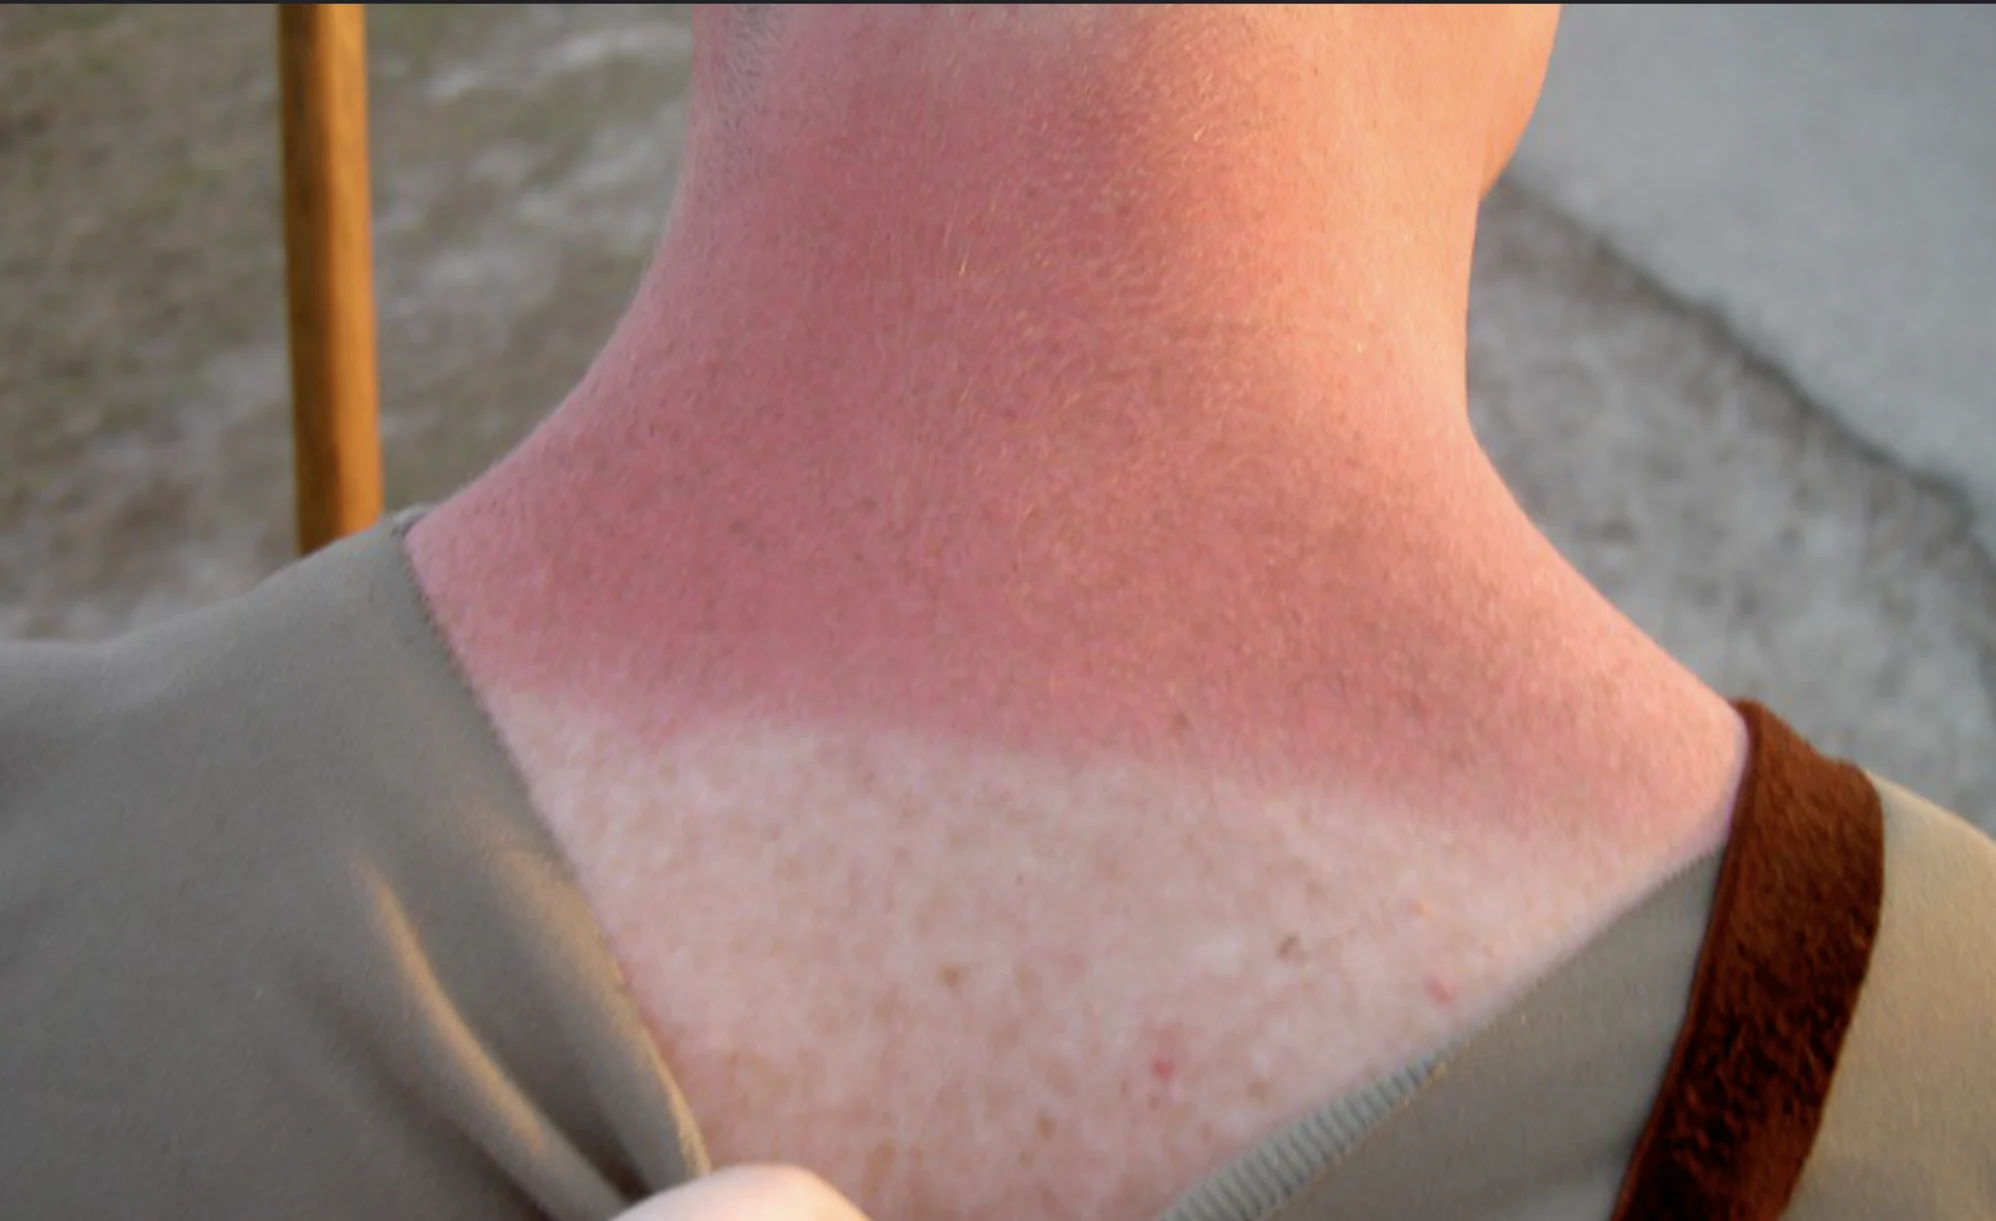 How to treat sunburn pain, according to skin experts